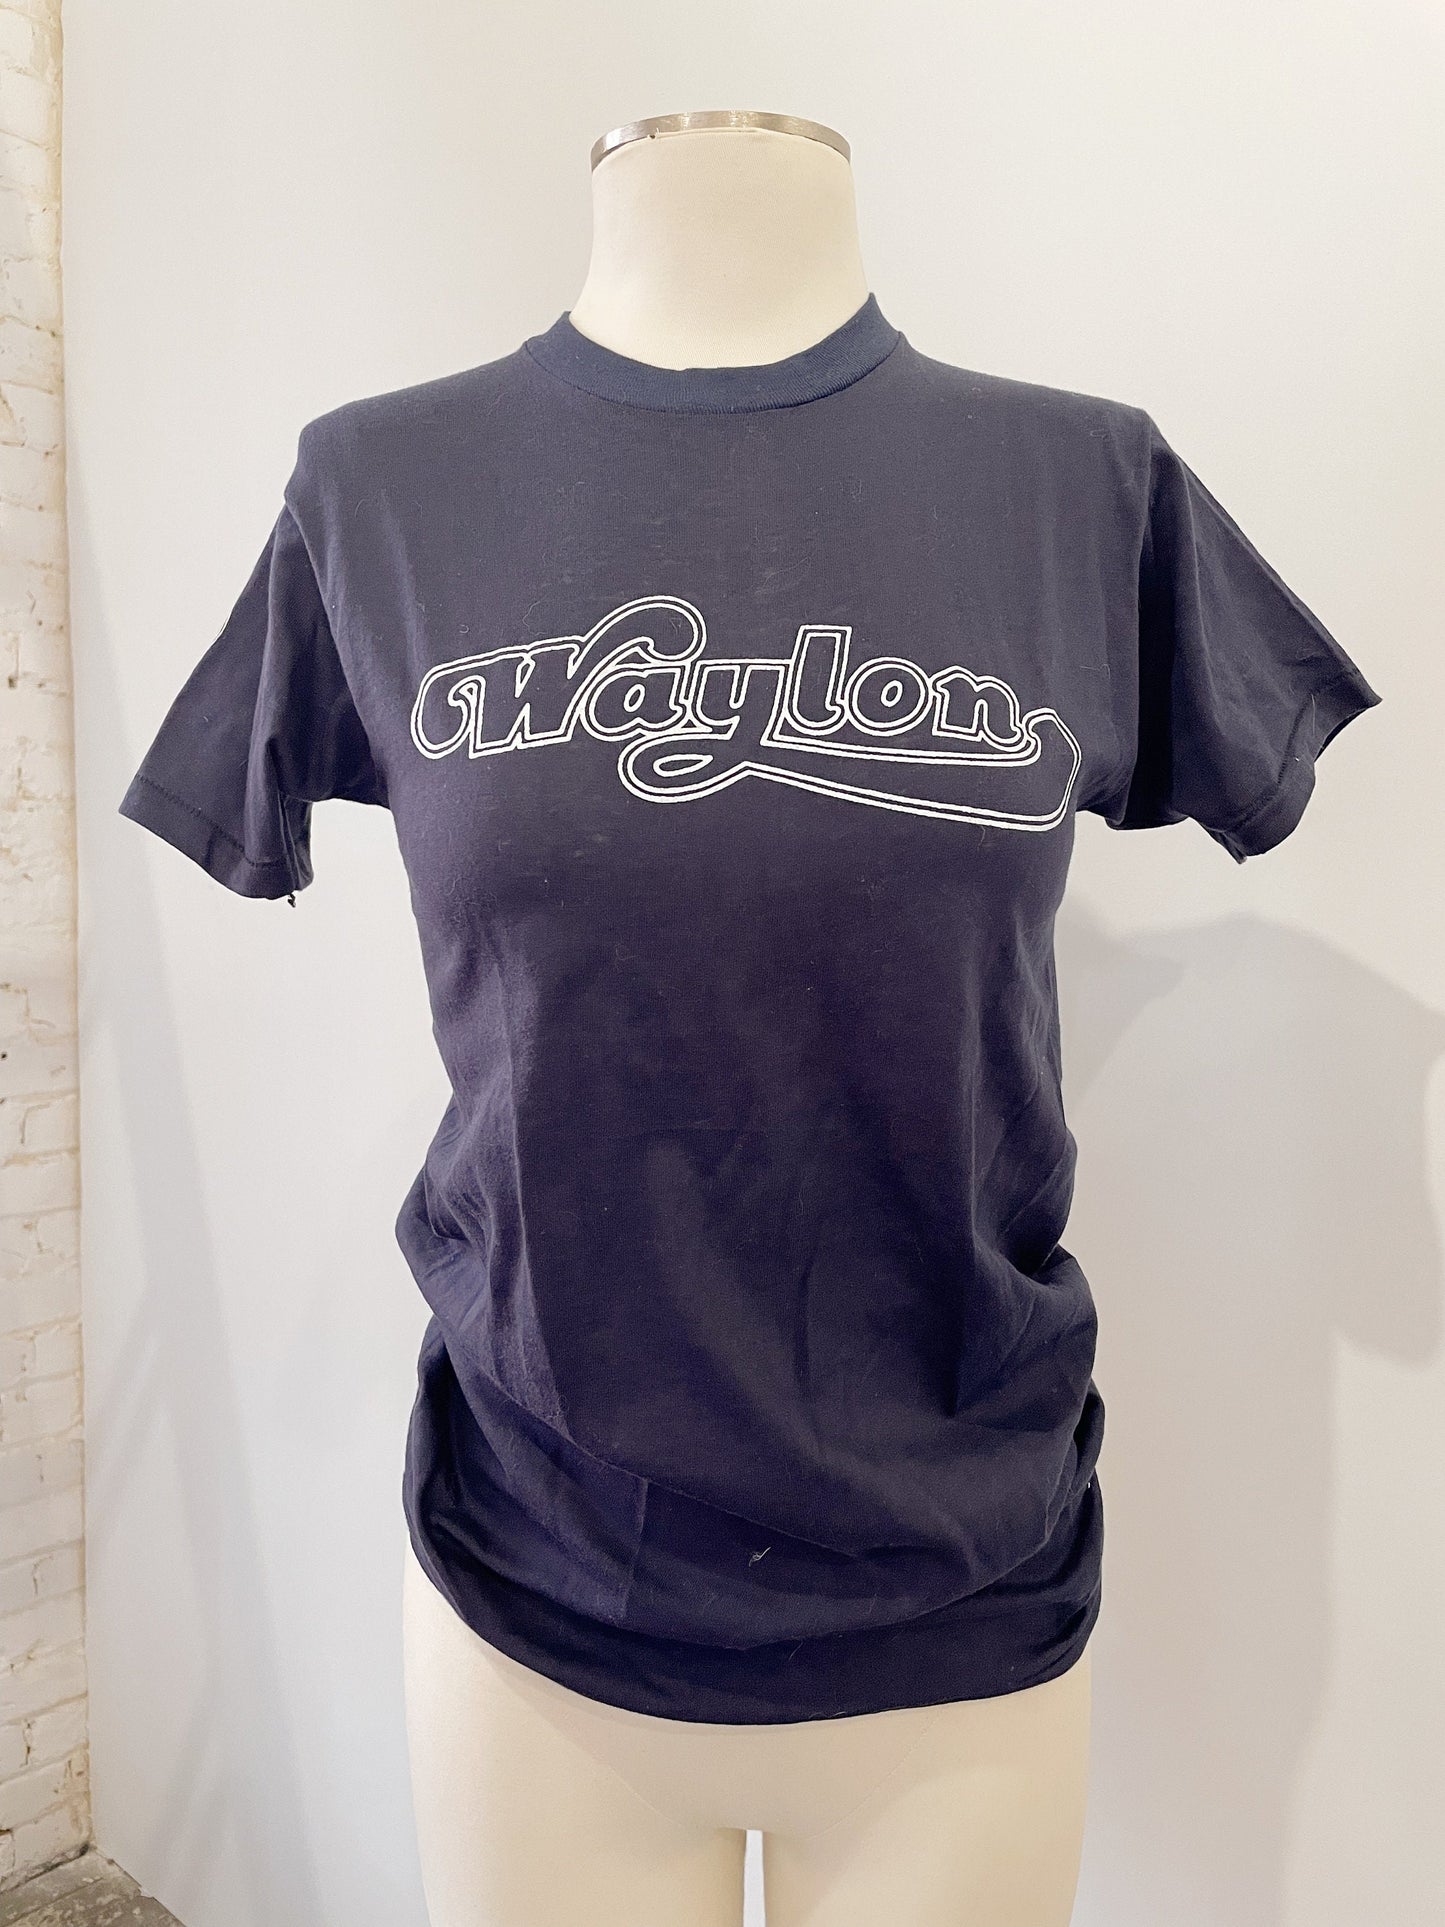 Waylon Jennings 70s Navy Tour T-Shirt